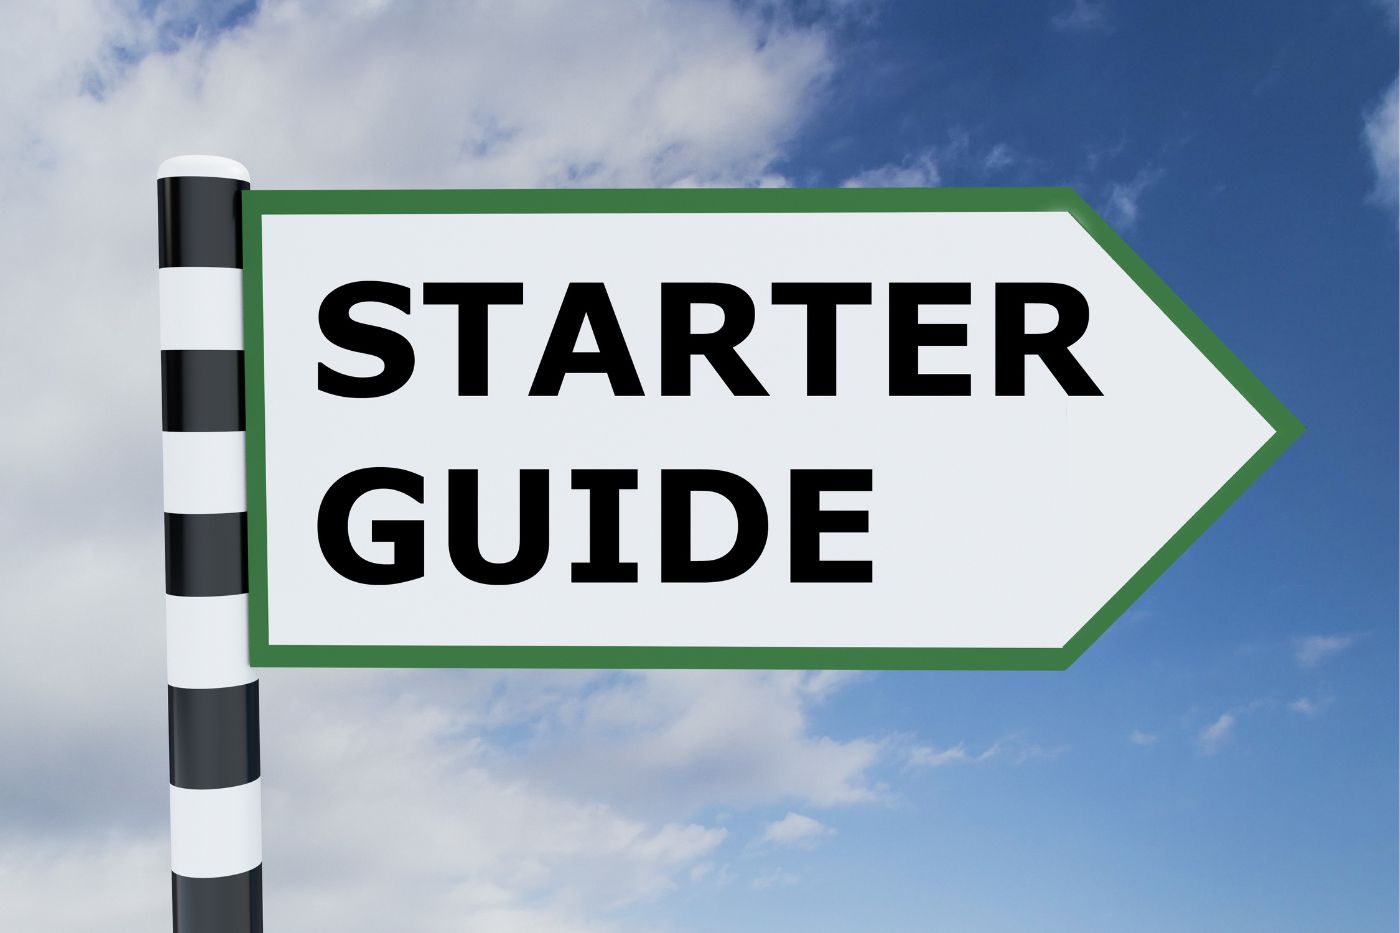 Starter Guide sign in Sky backgound